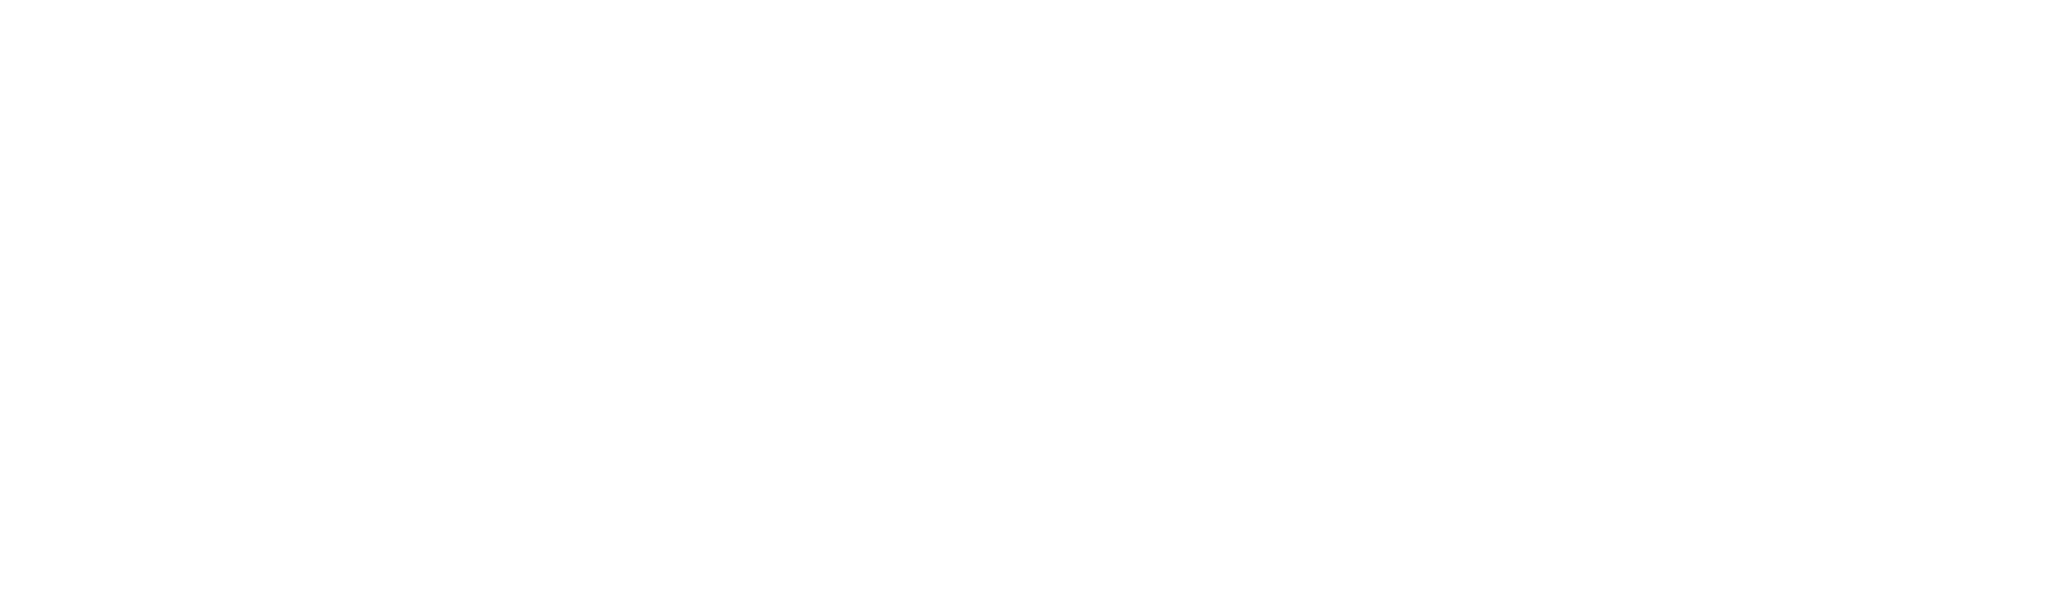 Best Web Design Dubai